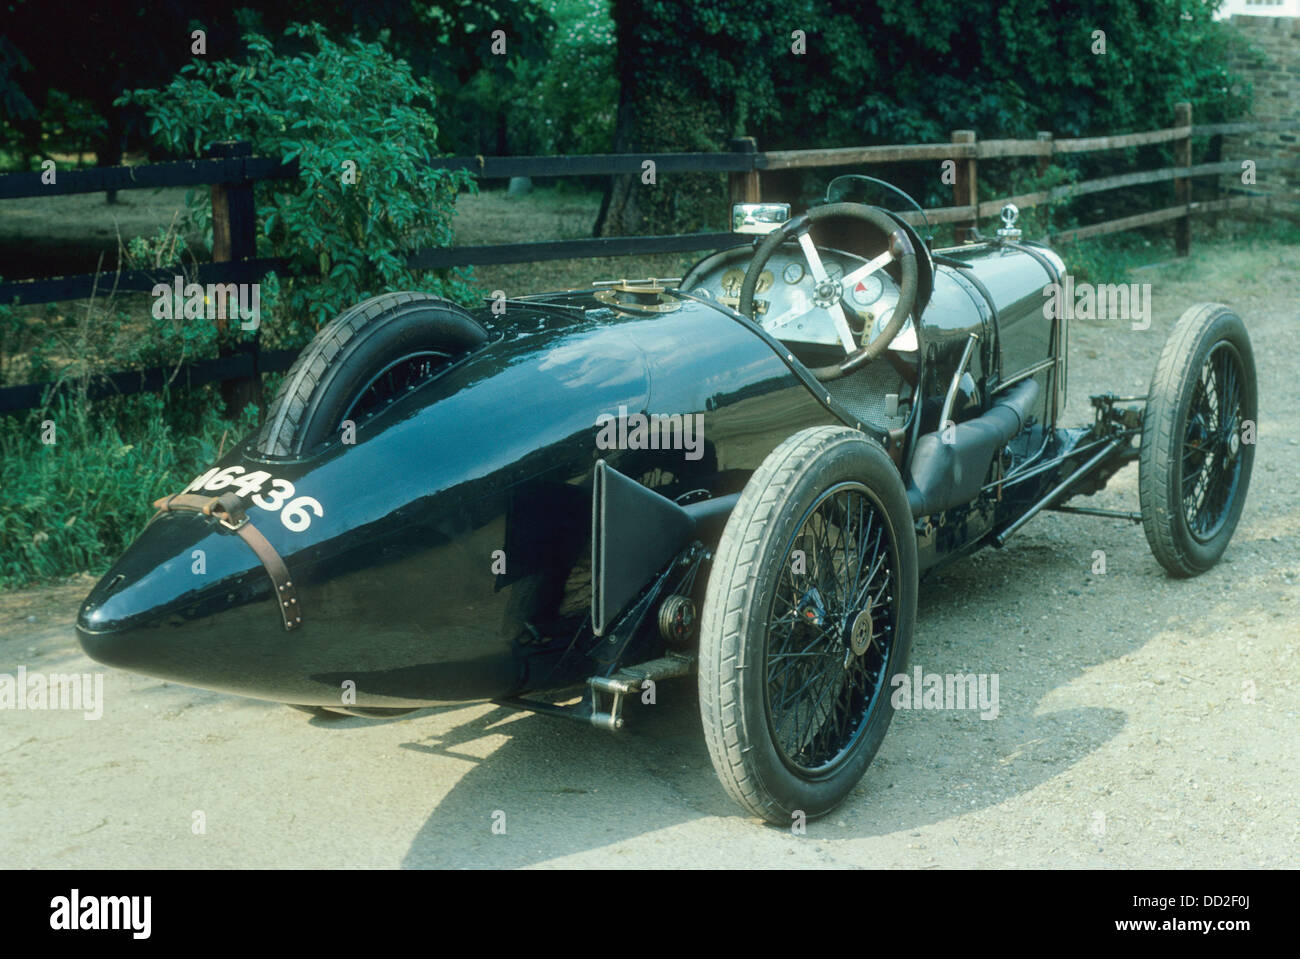 1929 SUNBEAM RACER Stock Photo